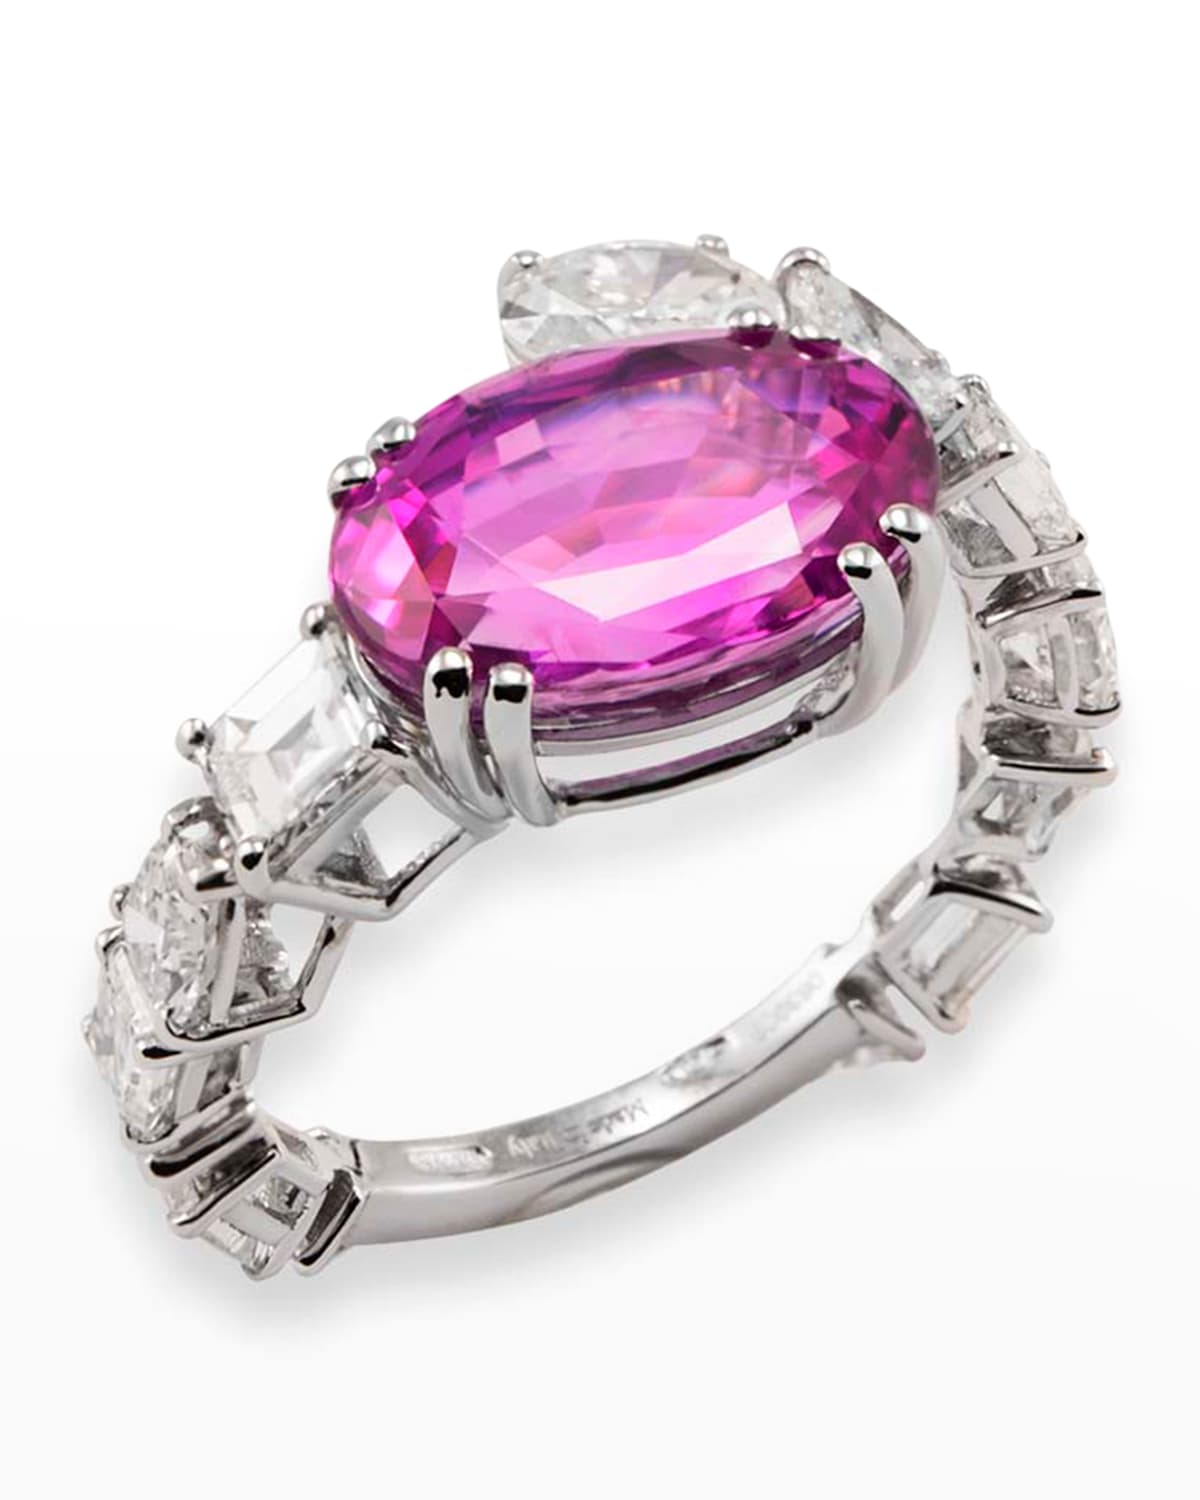 Staurino Couture Diamond And Sapphire Ring